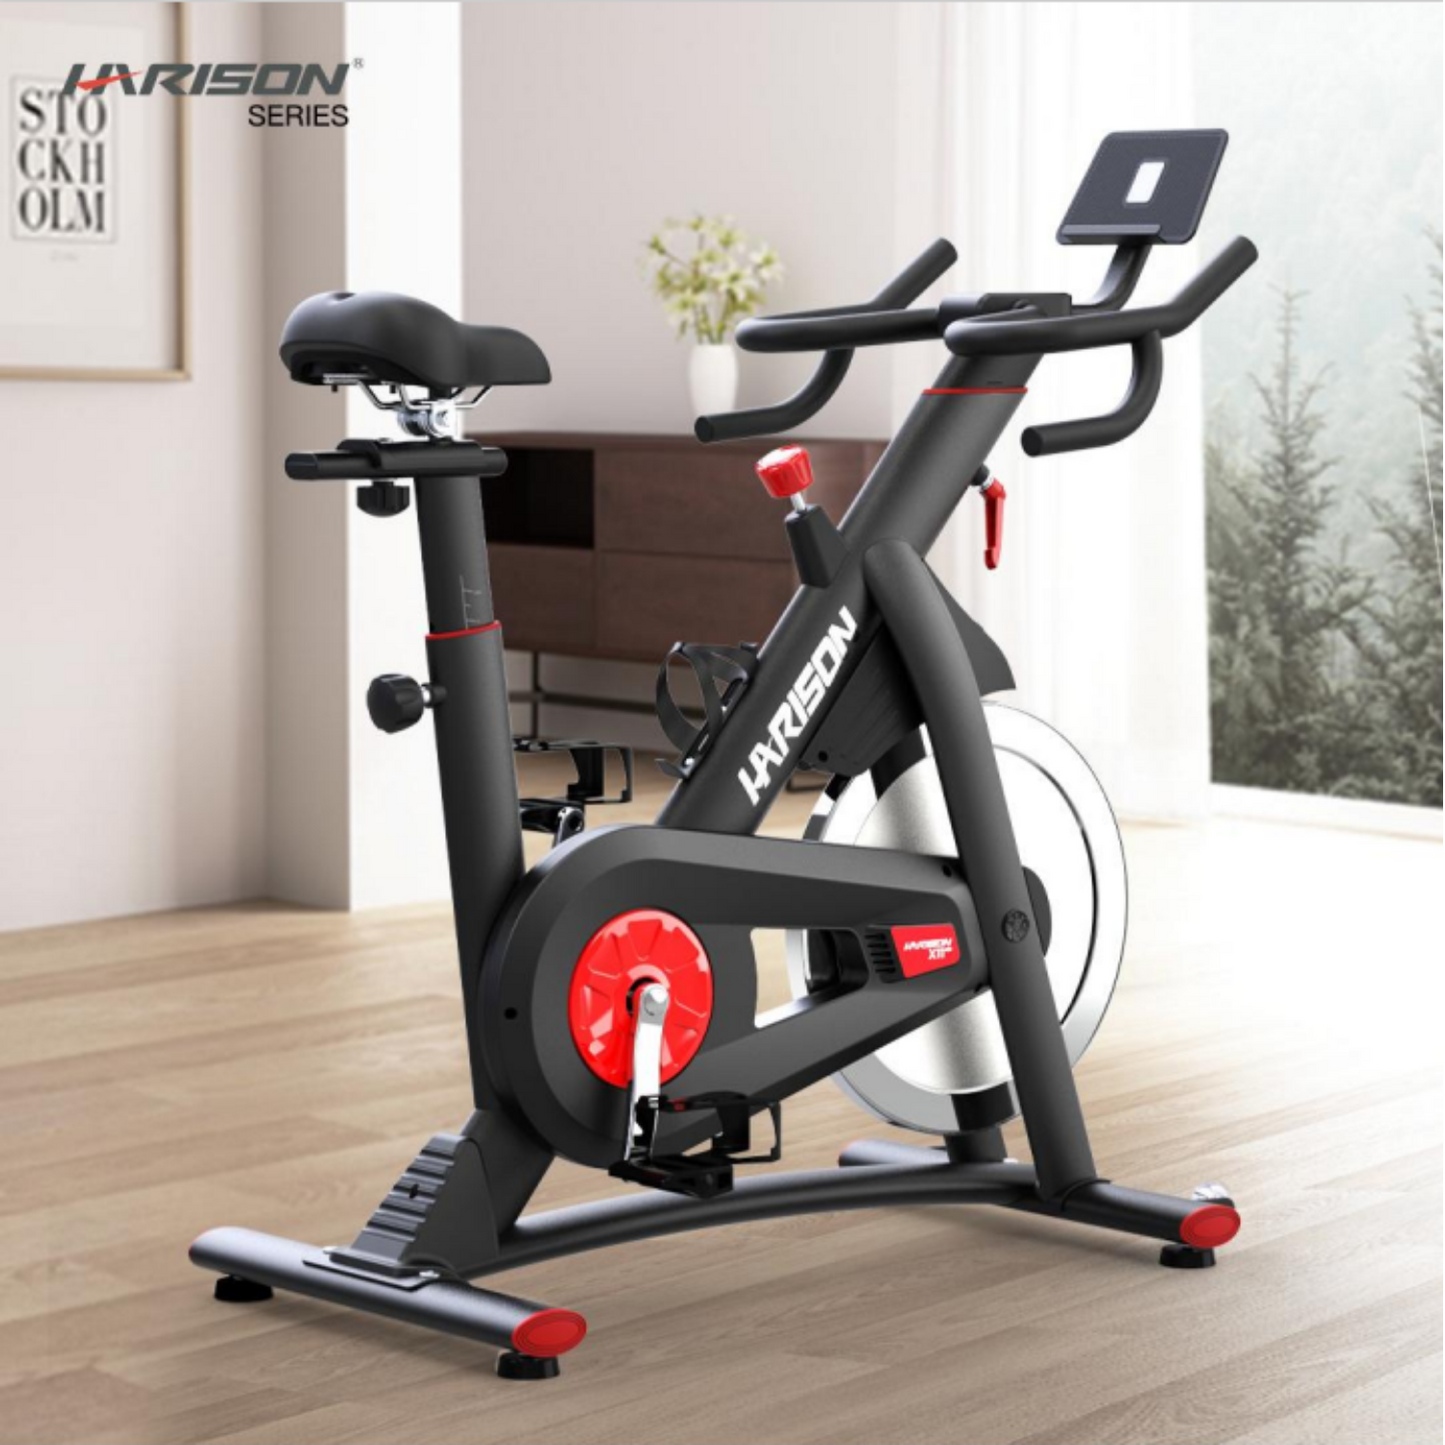 Harison X11 Exercise Bike-Gym Direct